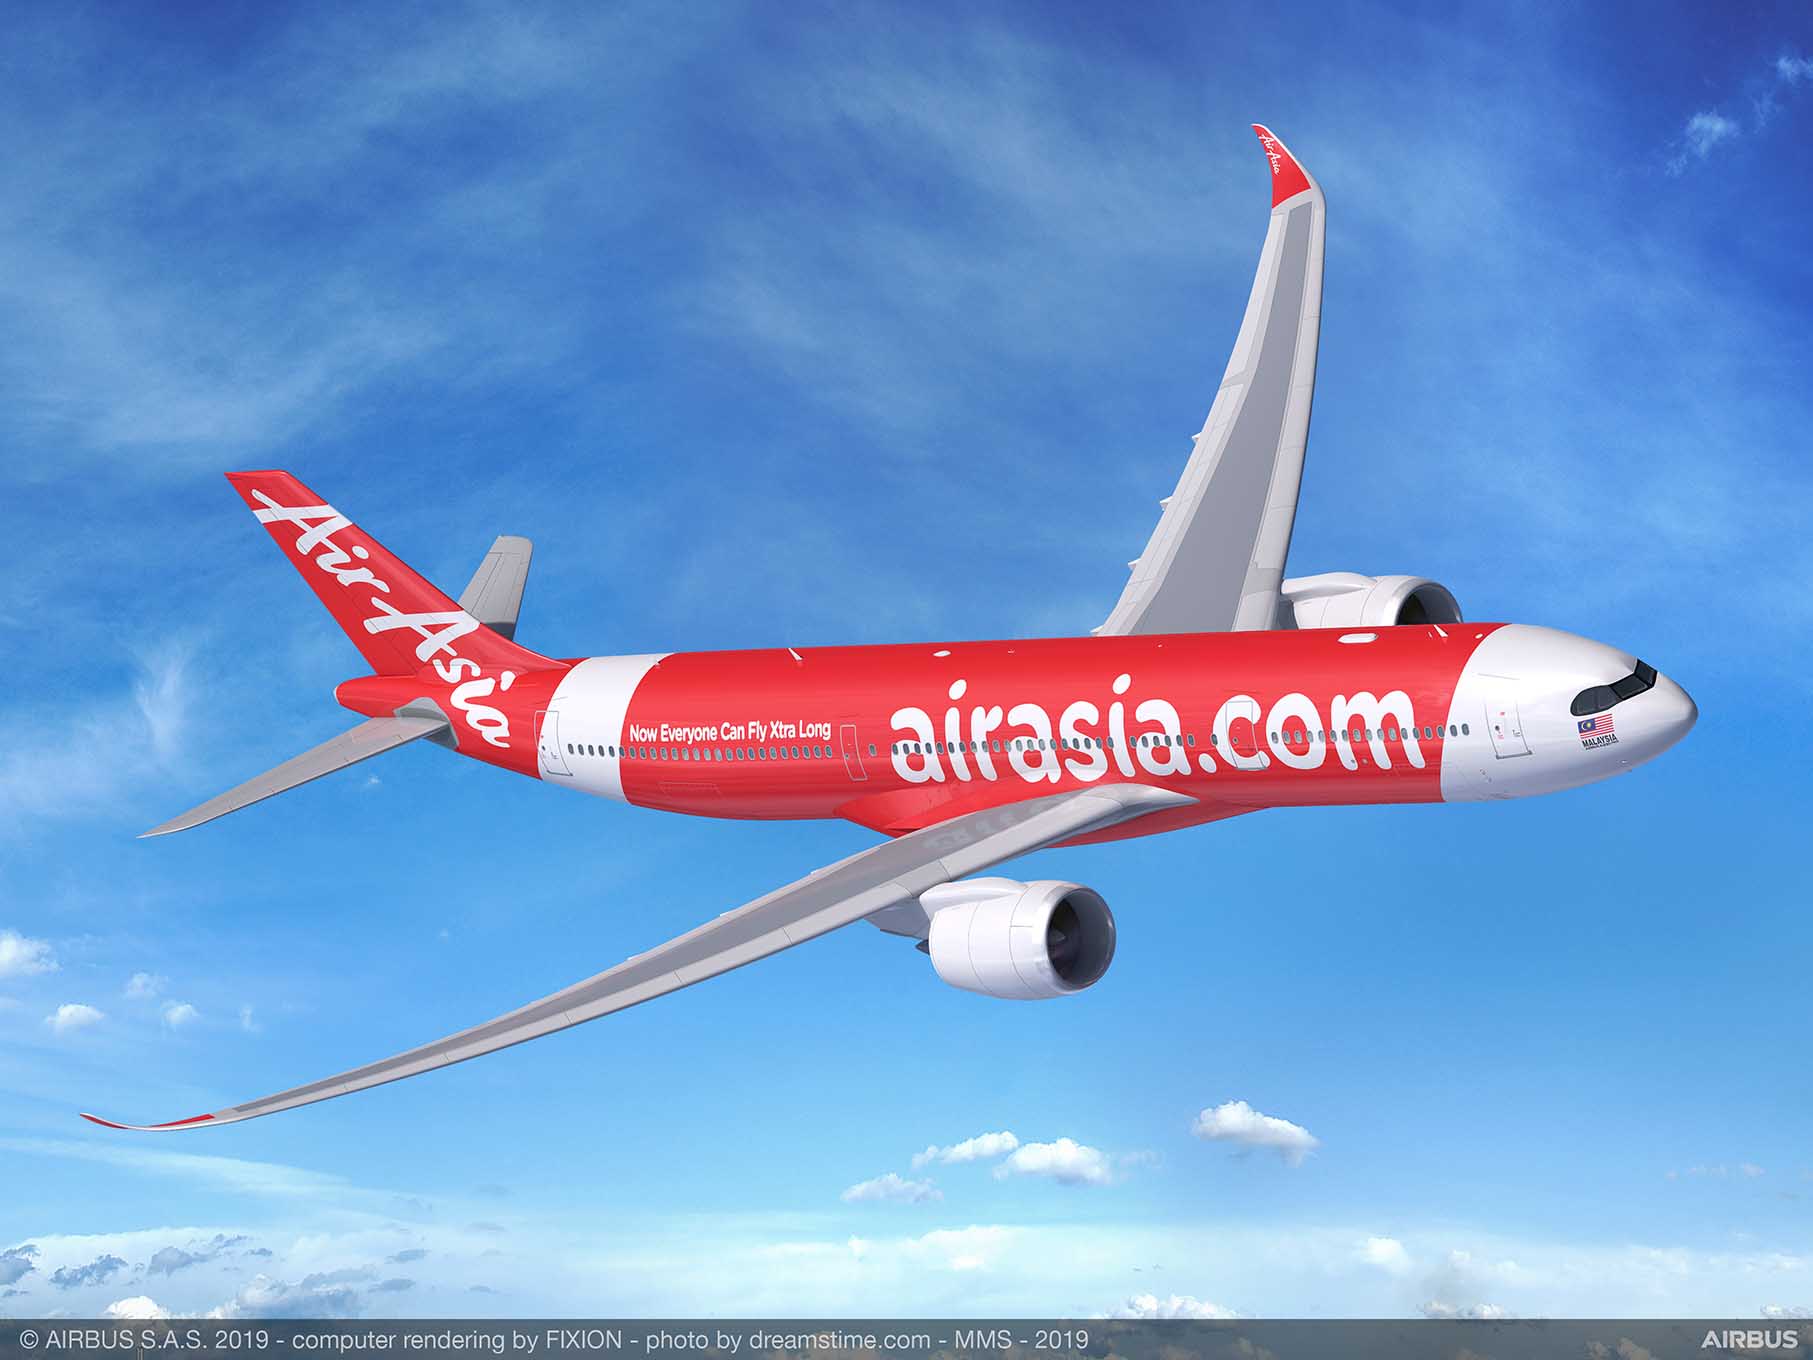 AirAsia Group Berhad reports revenue increase in Q3 2019